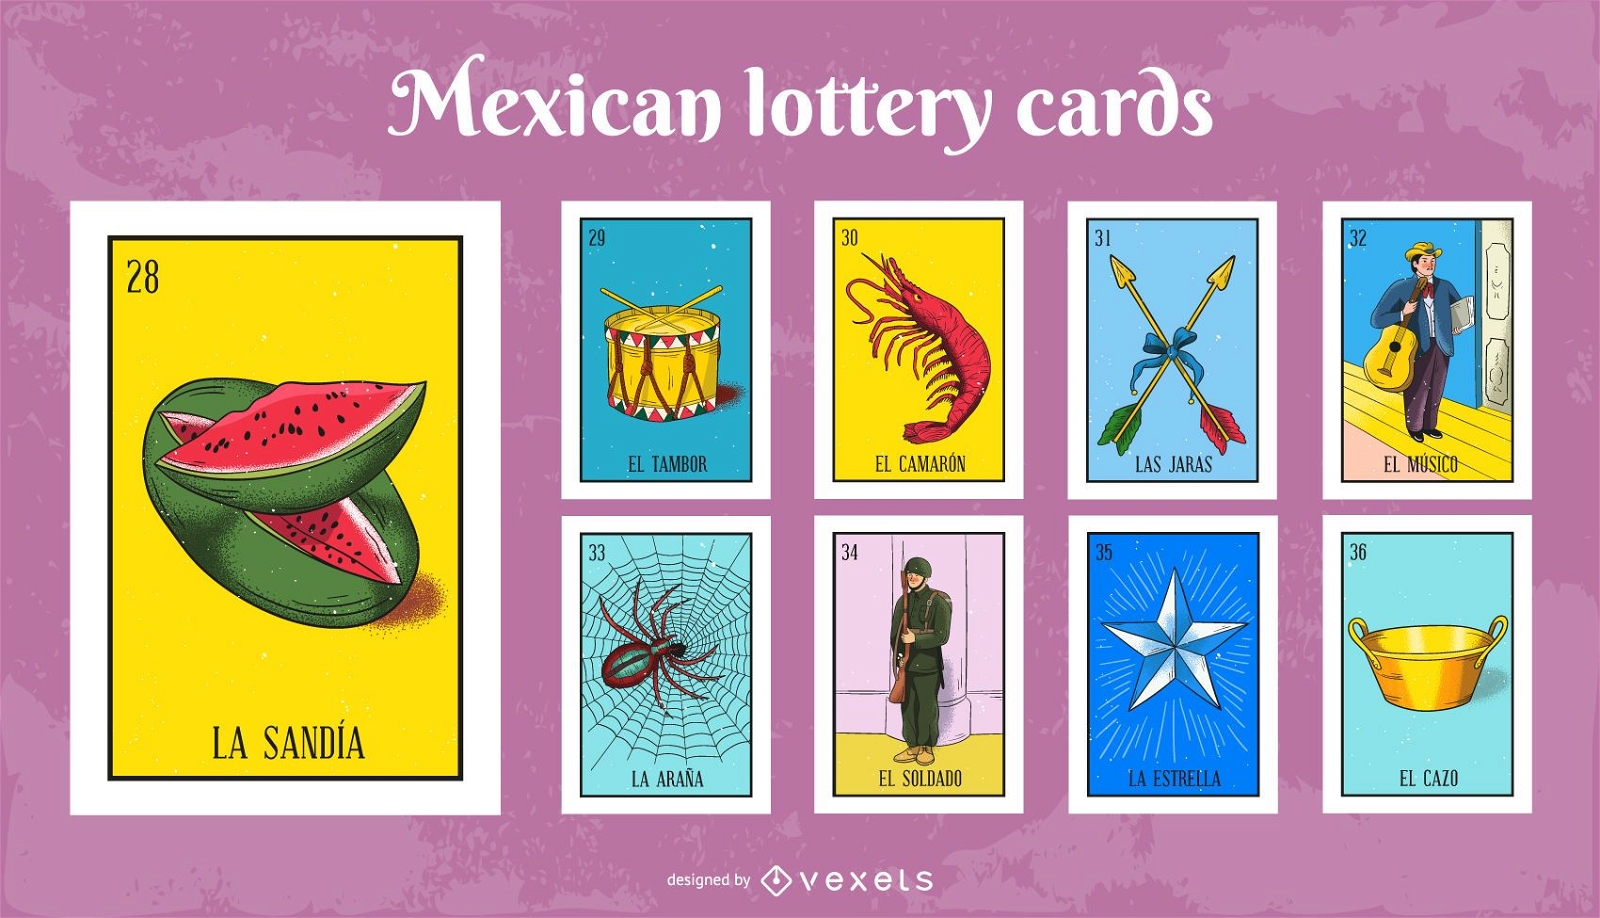 Juego de tarjetas de loter?a mexicana